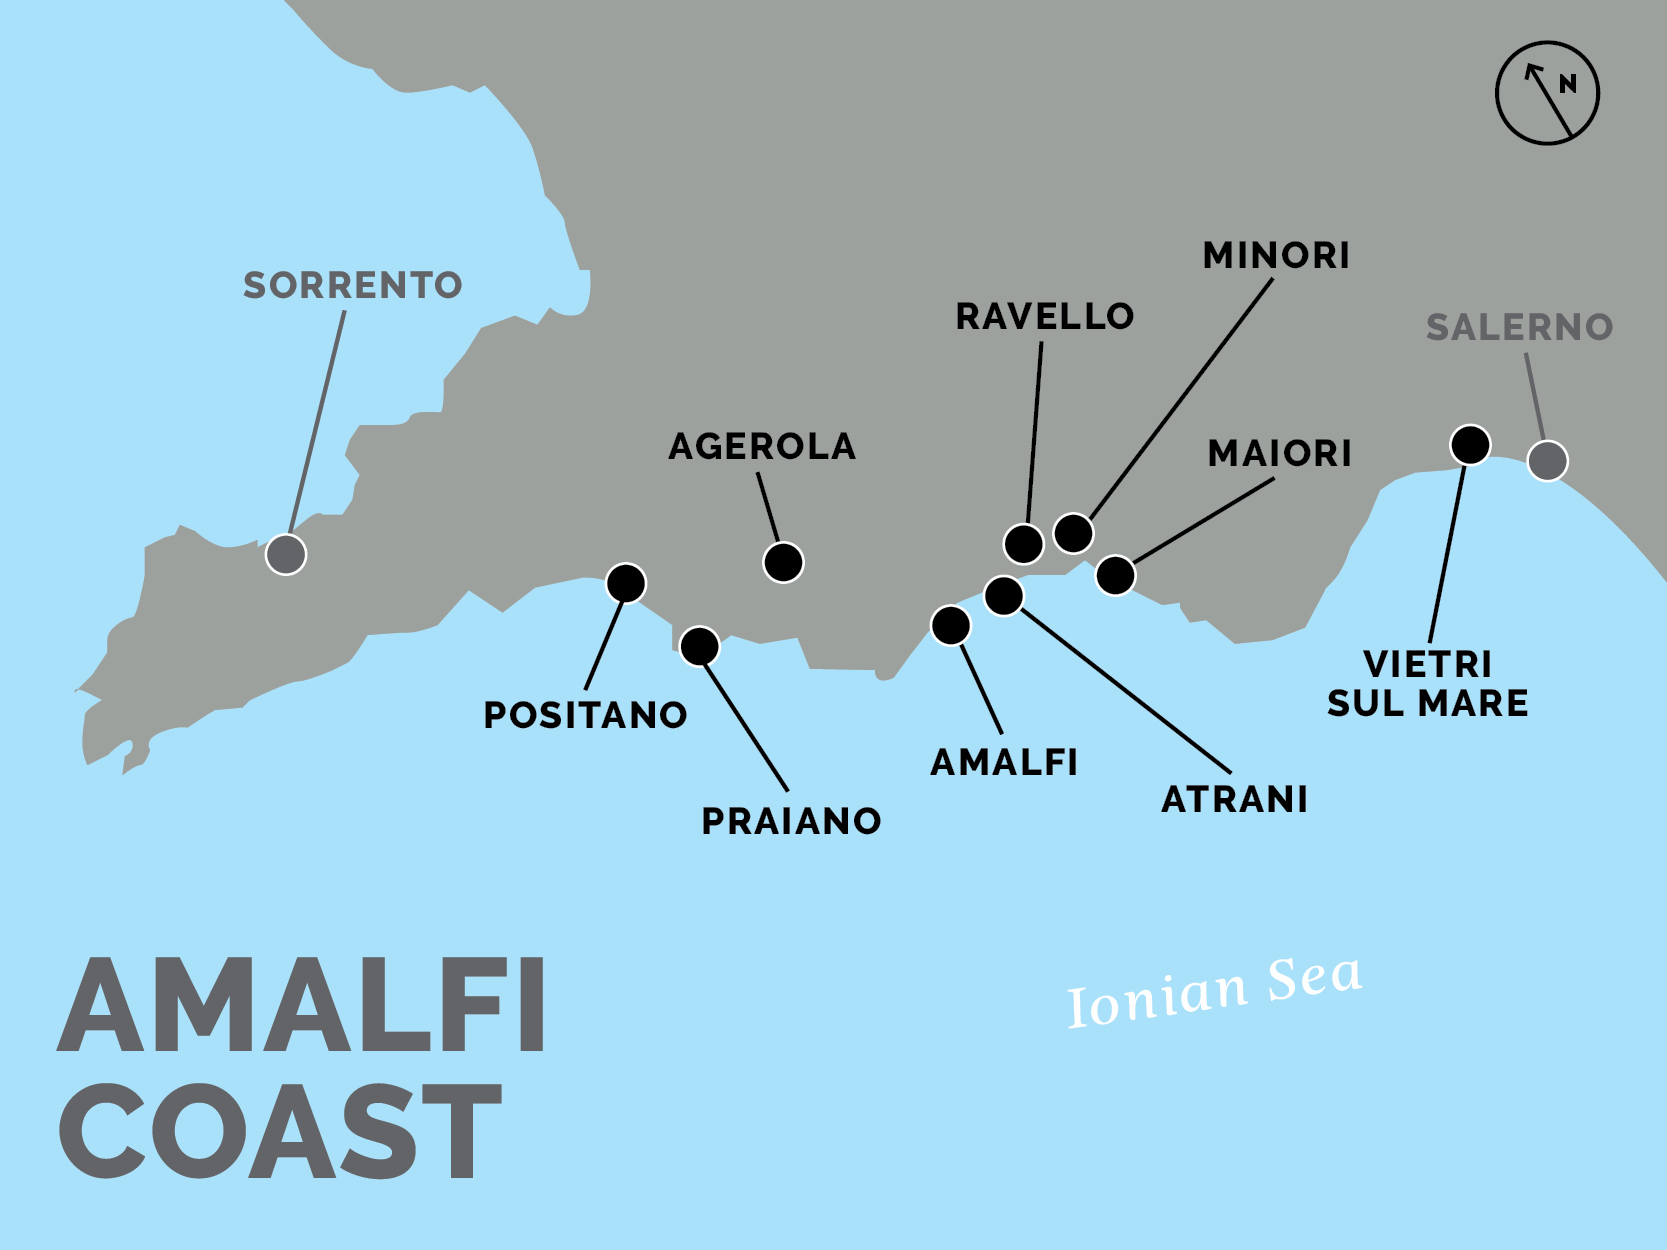 Amalfi coast map and district names